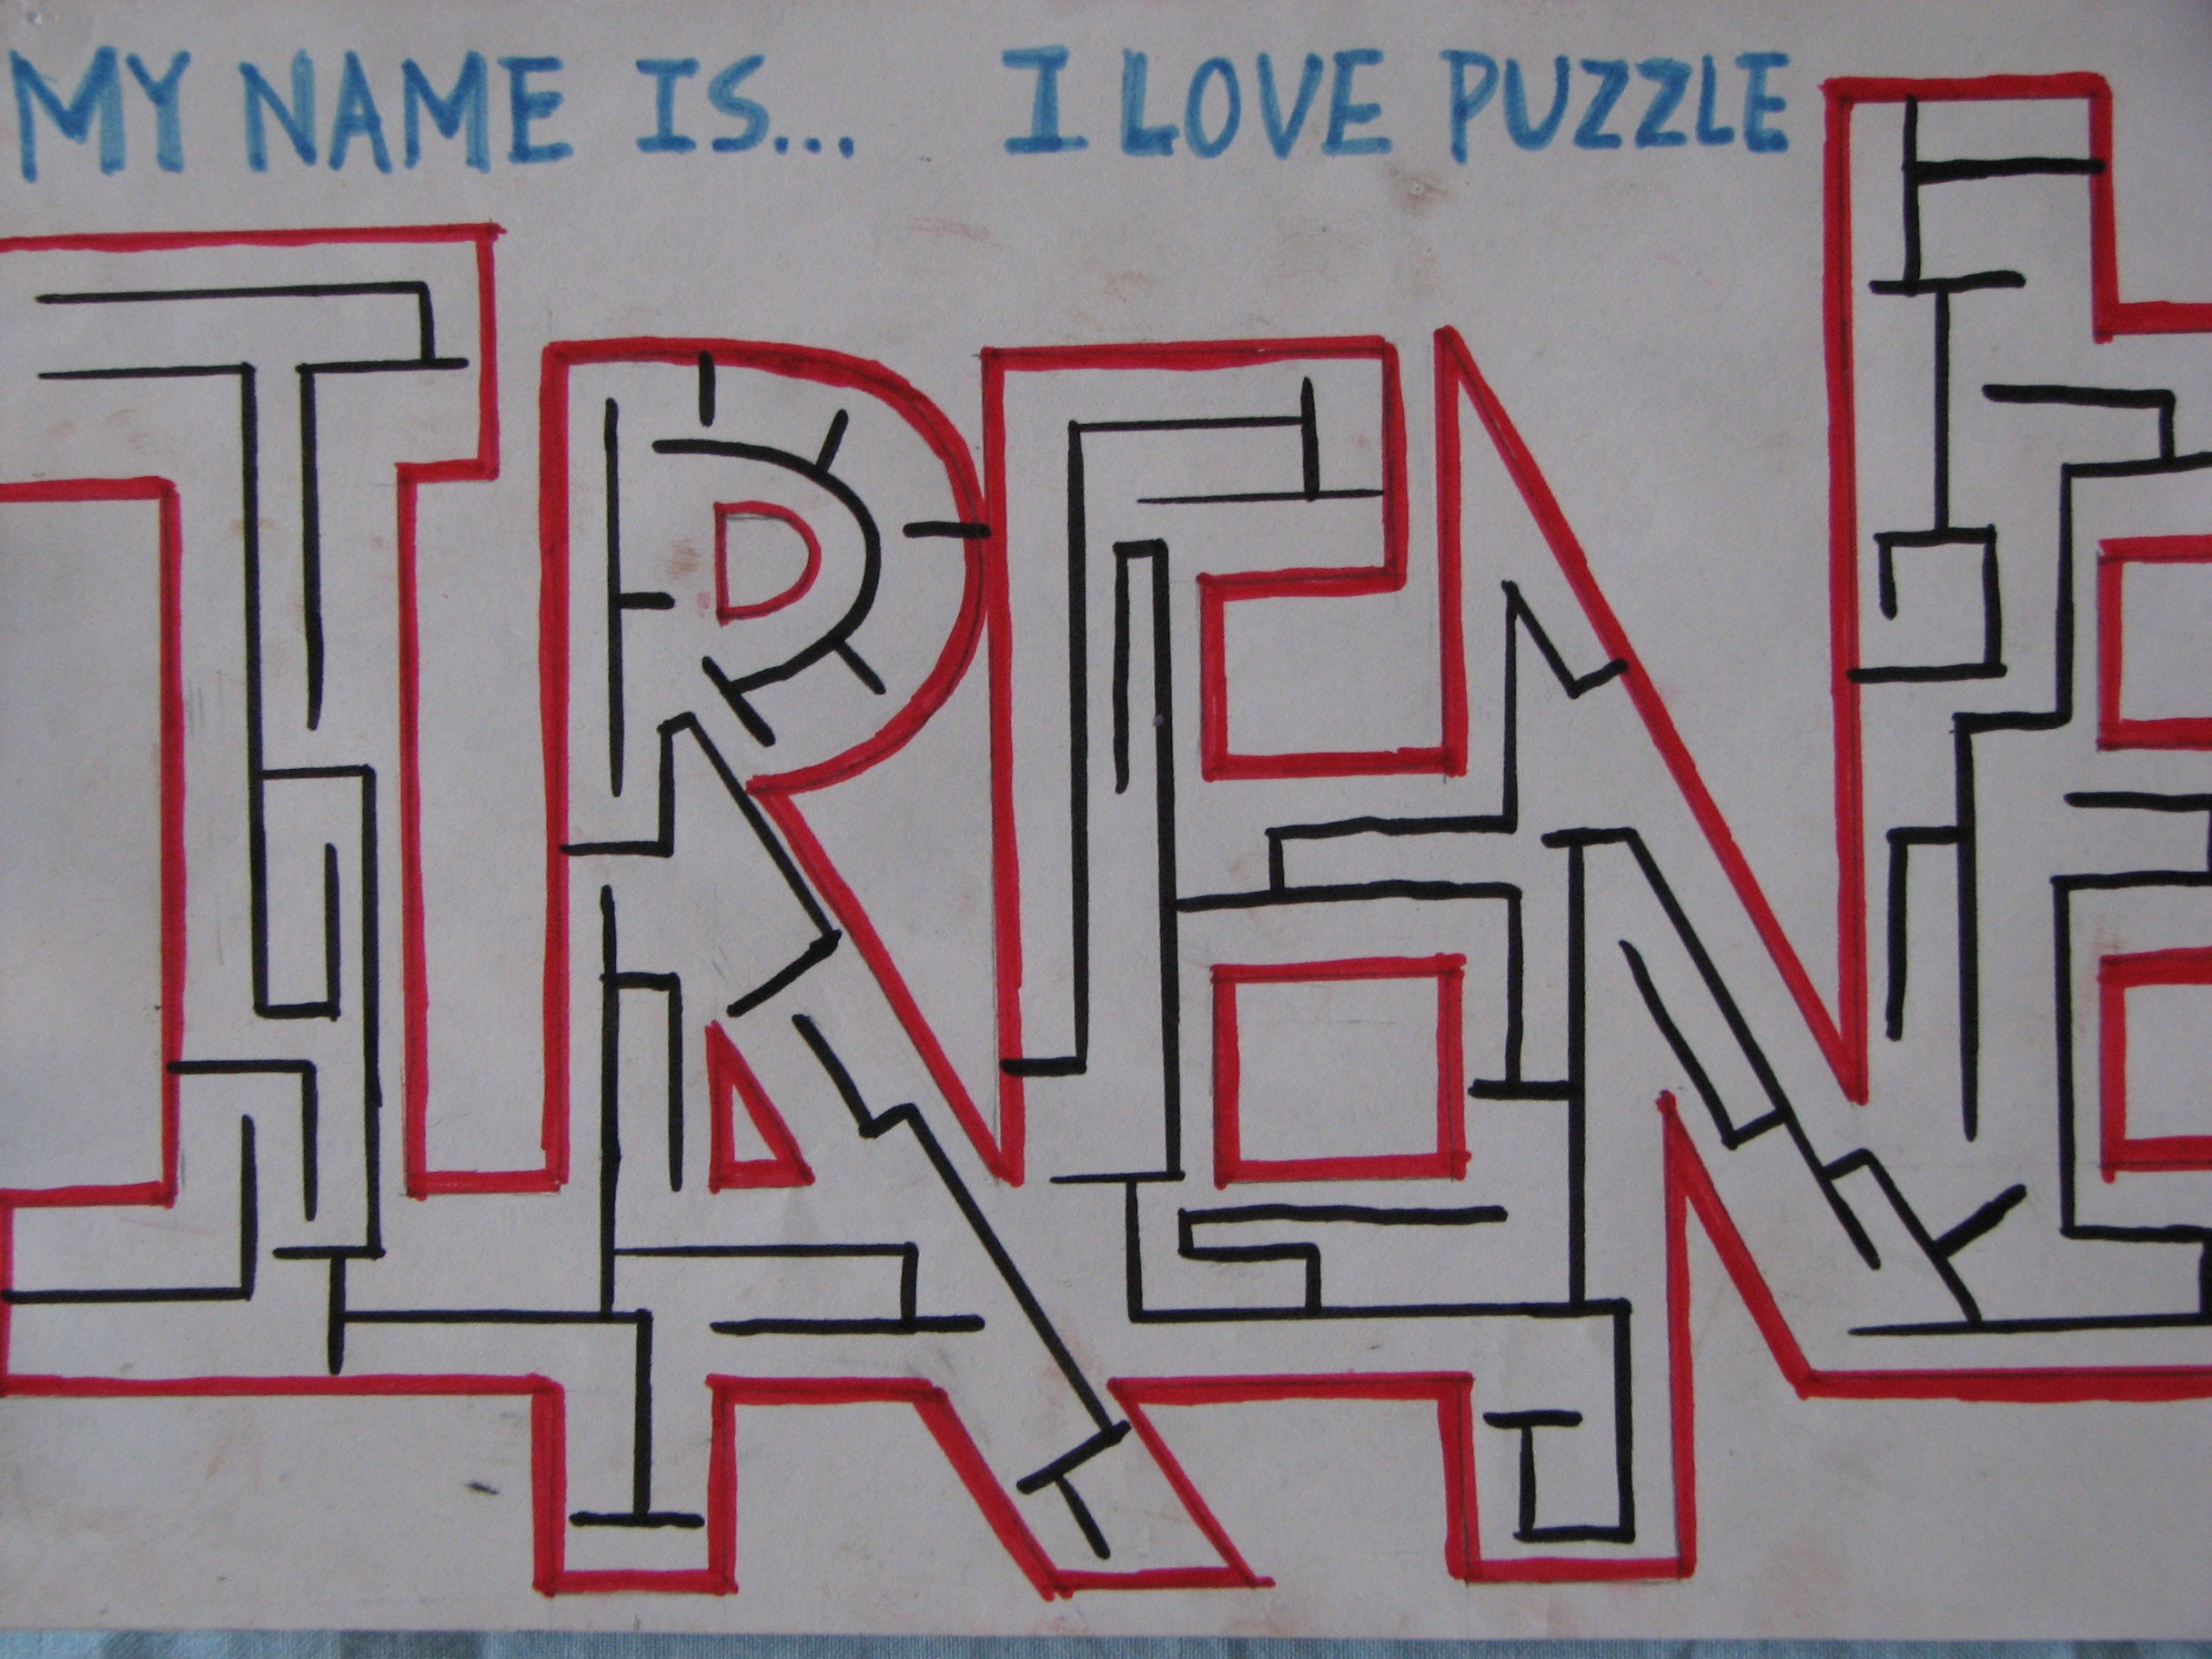 Irene loves puzzle!